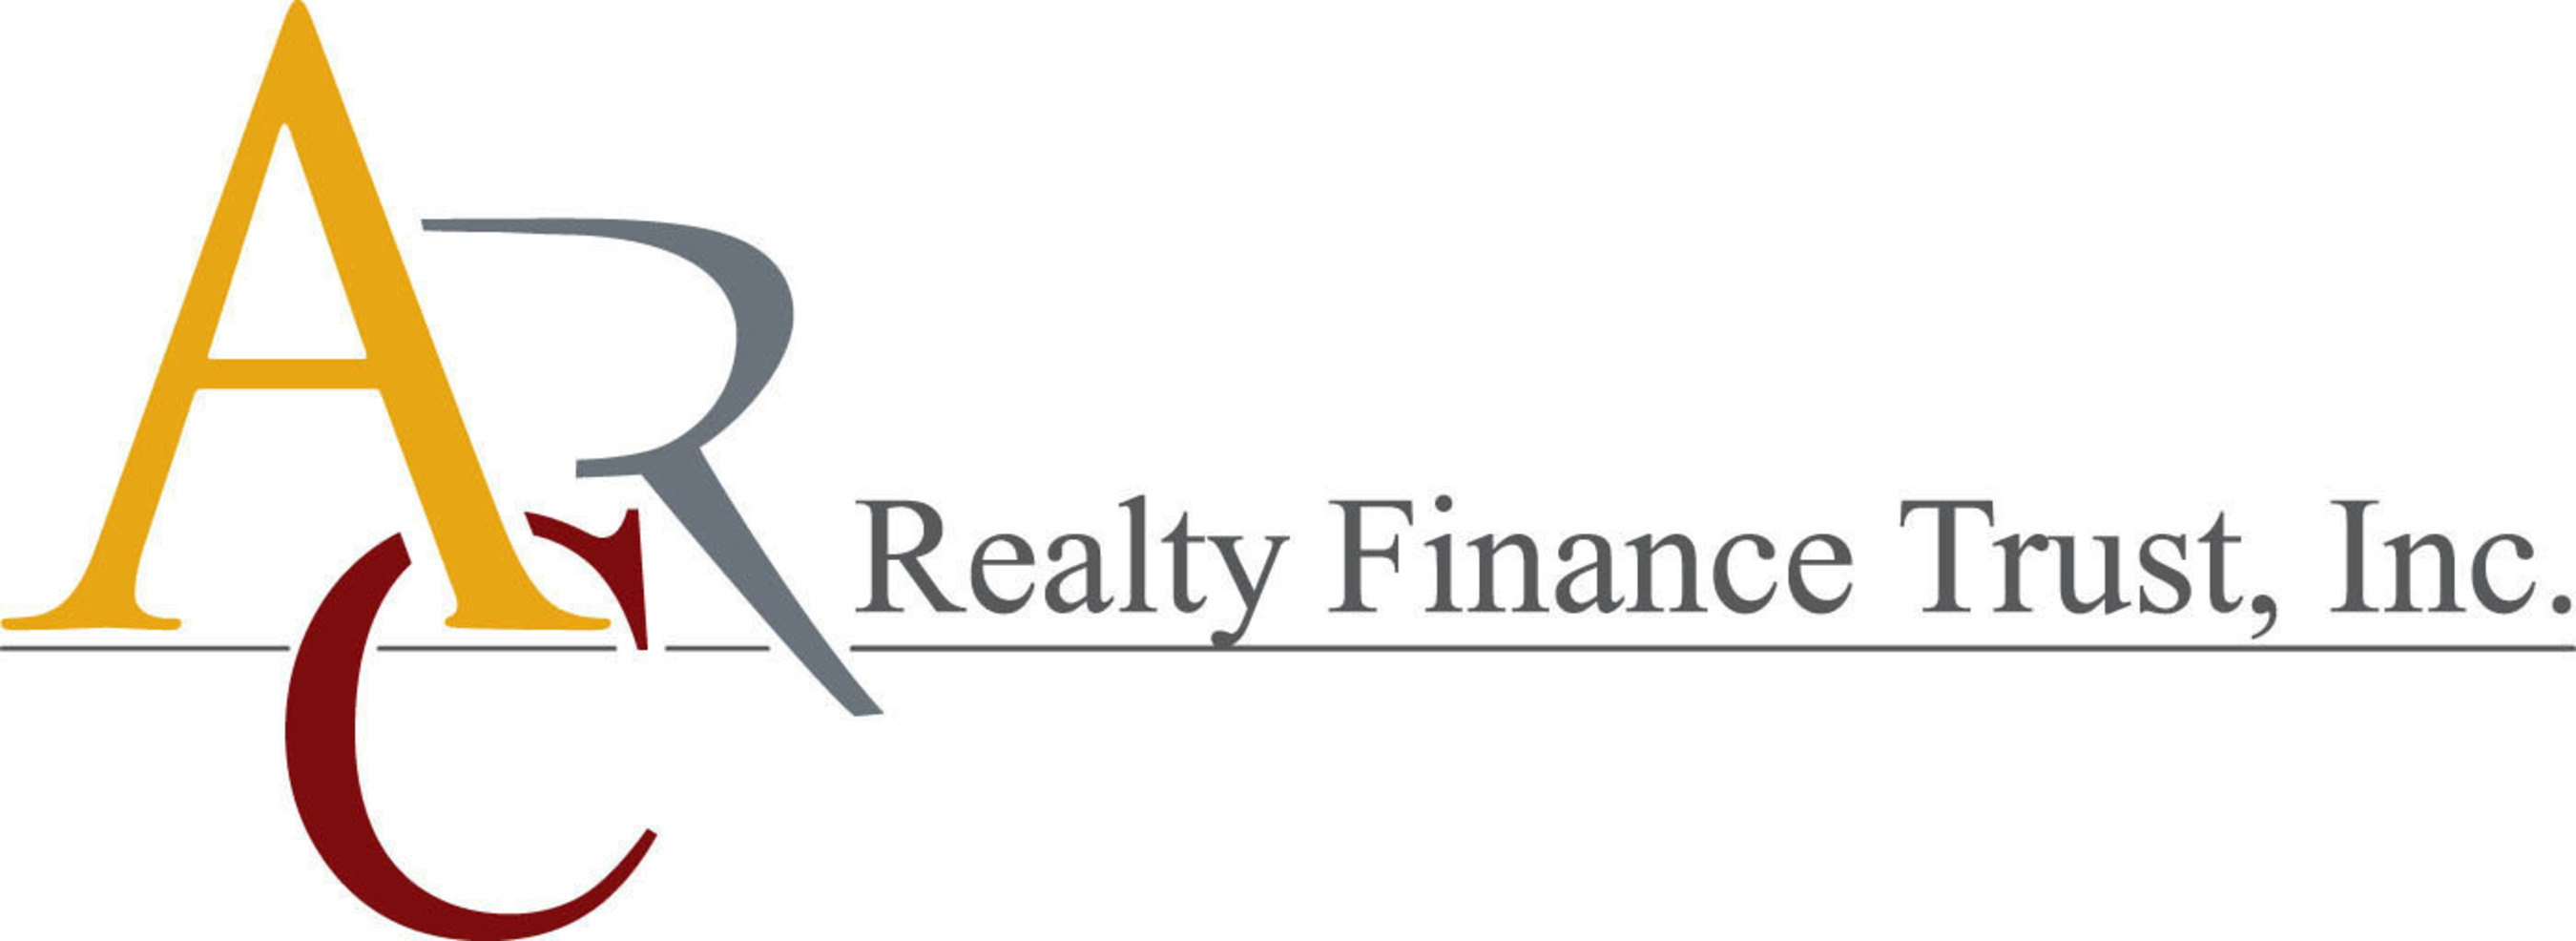 ARC Realty Finance Trust Makes First Portfolio Investment. (PRNewsFoto/ARC Realty Finance Trust, Inc.) (PRNewsFoto/)